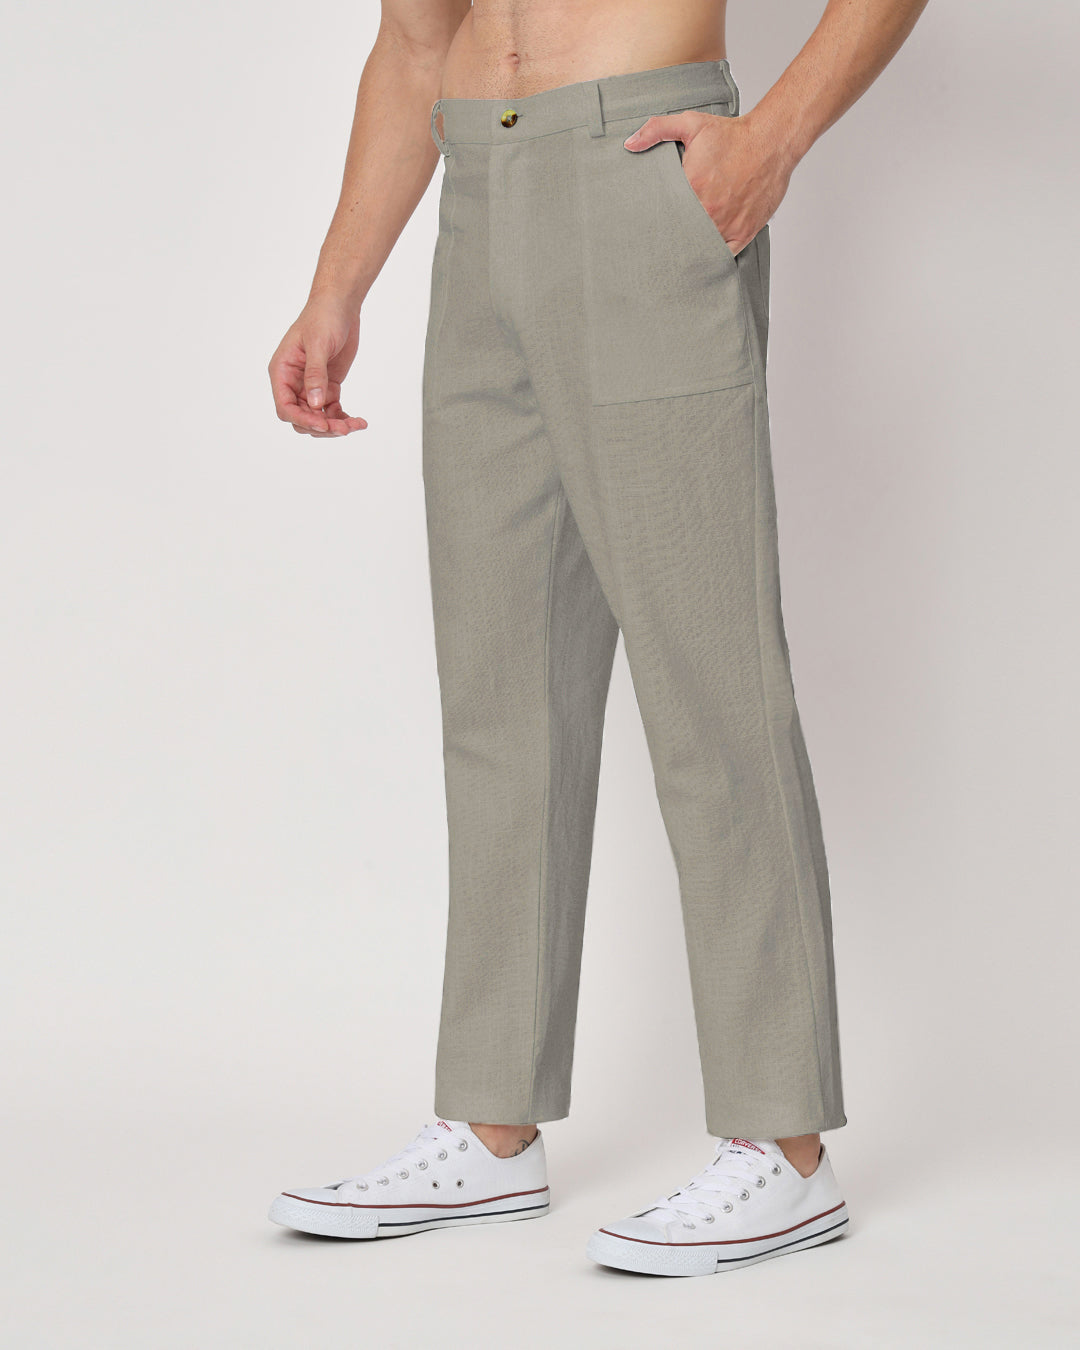 Combo : Comfy Ease Beige & Grey Men's Pants - Set of 2